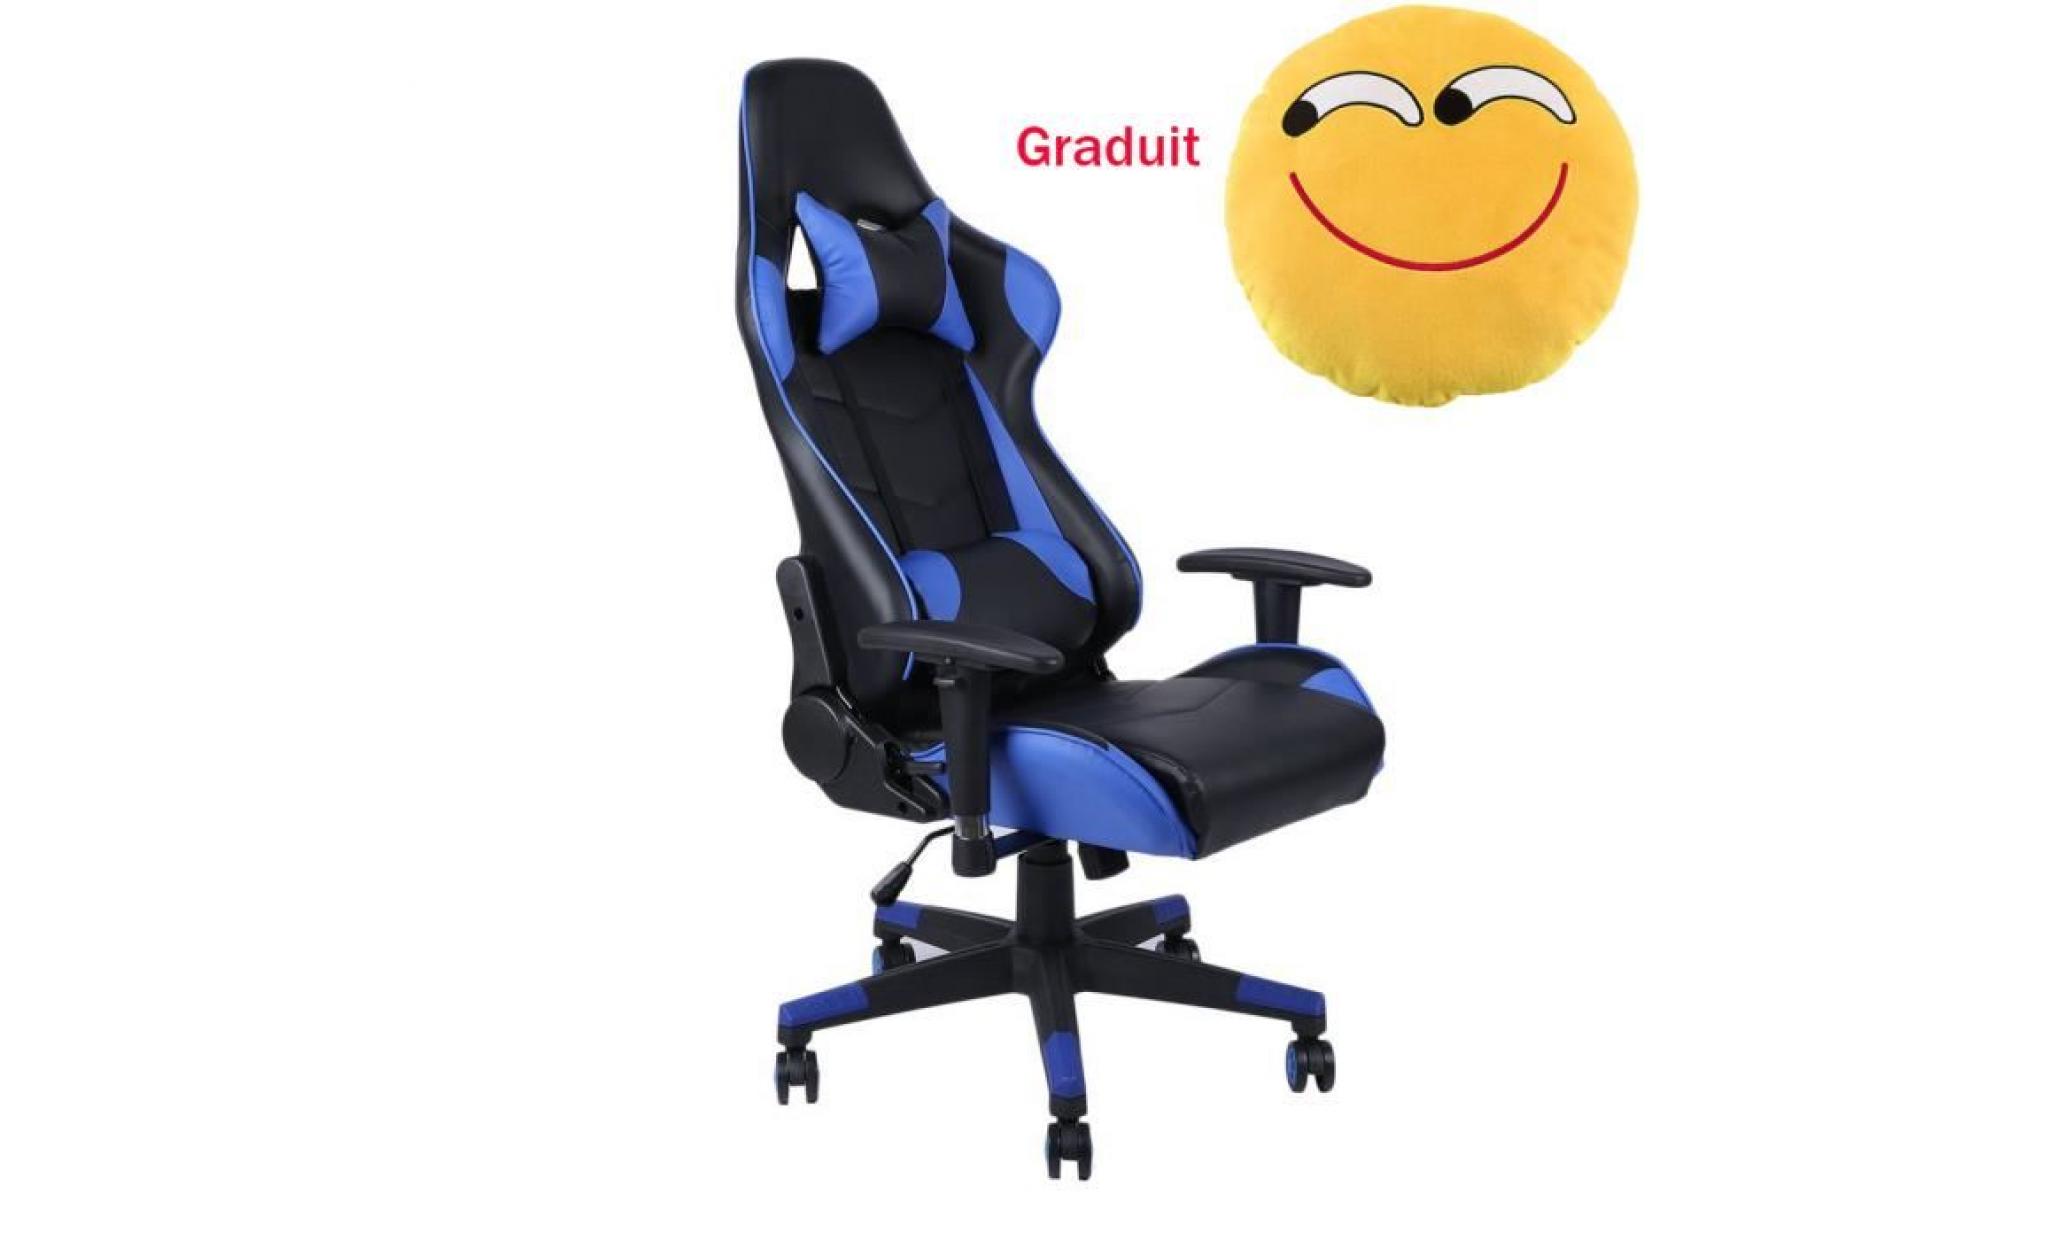 leshp fauteuil de bureau 135°anti fatigue gamer design modern ergonomique chaise de jeu+ graduit poupée oreiller